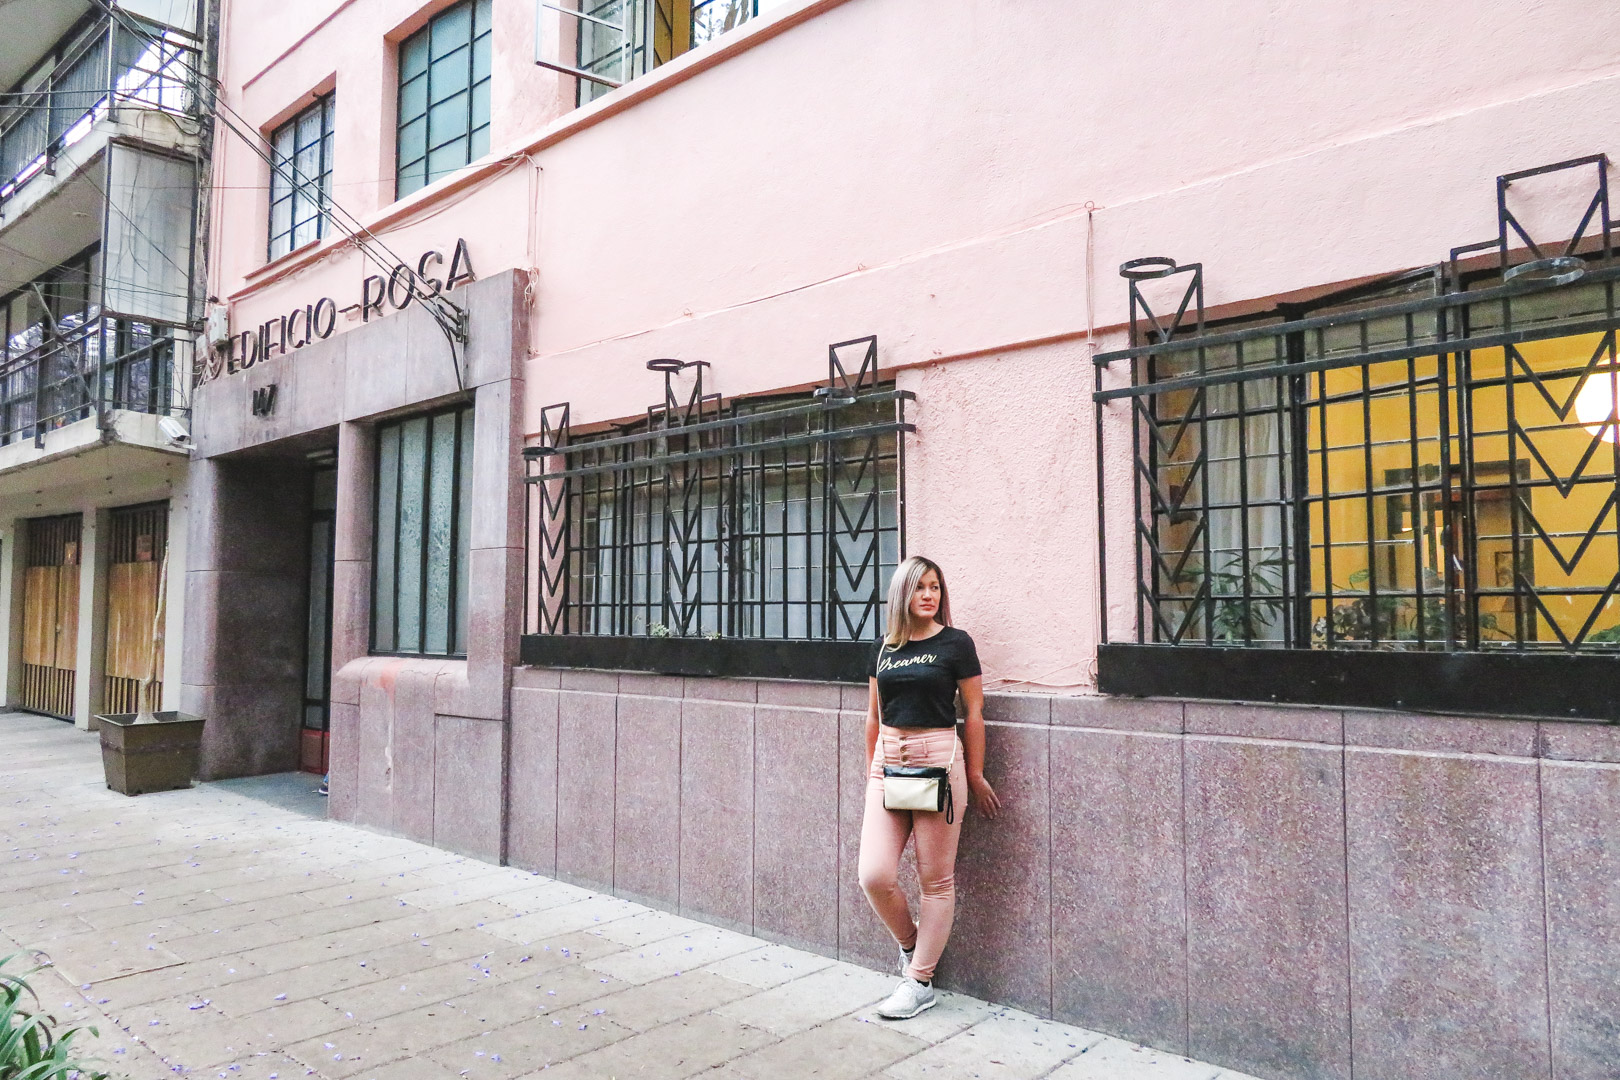 Mexico City Condesa Edificio Rosa